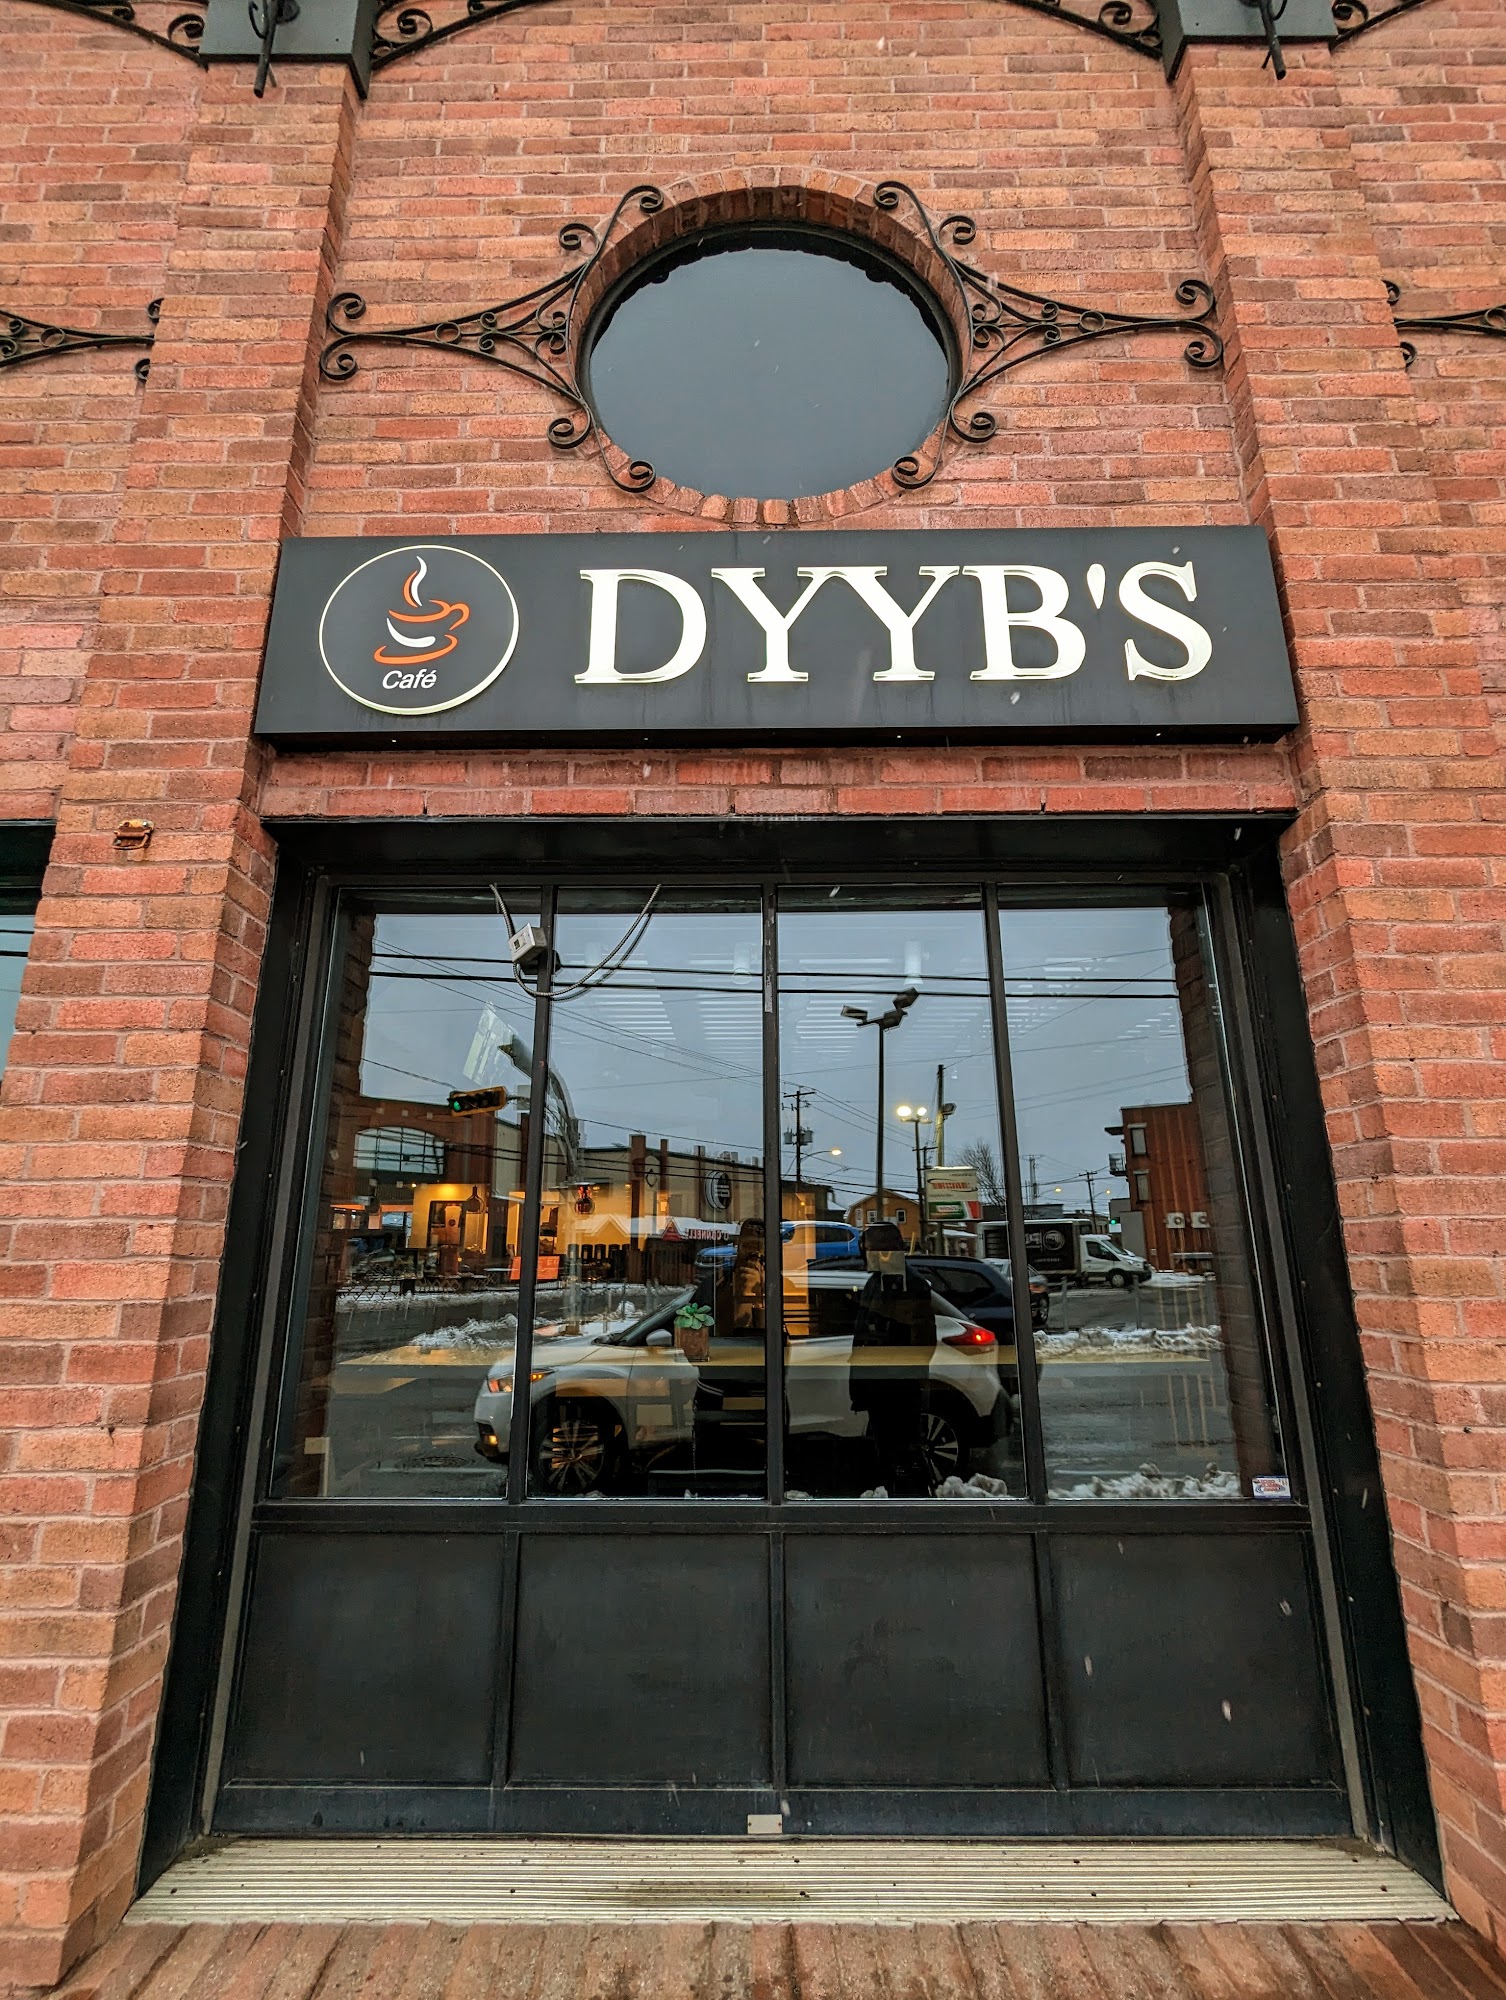 Dyyb's café